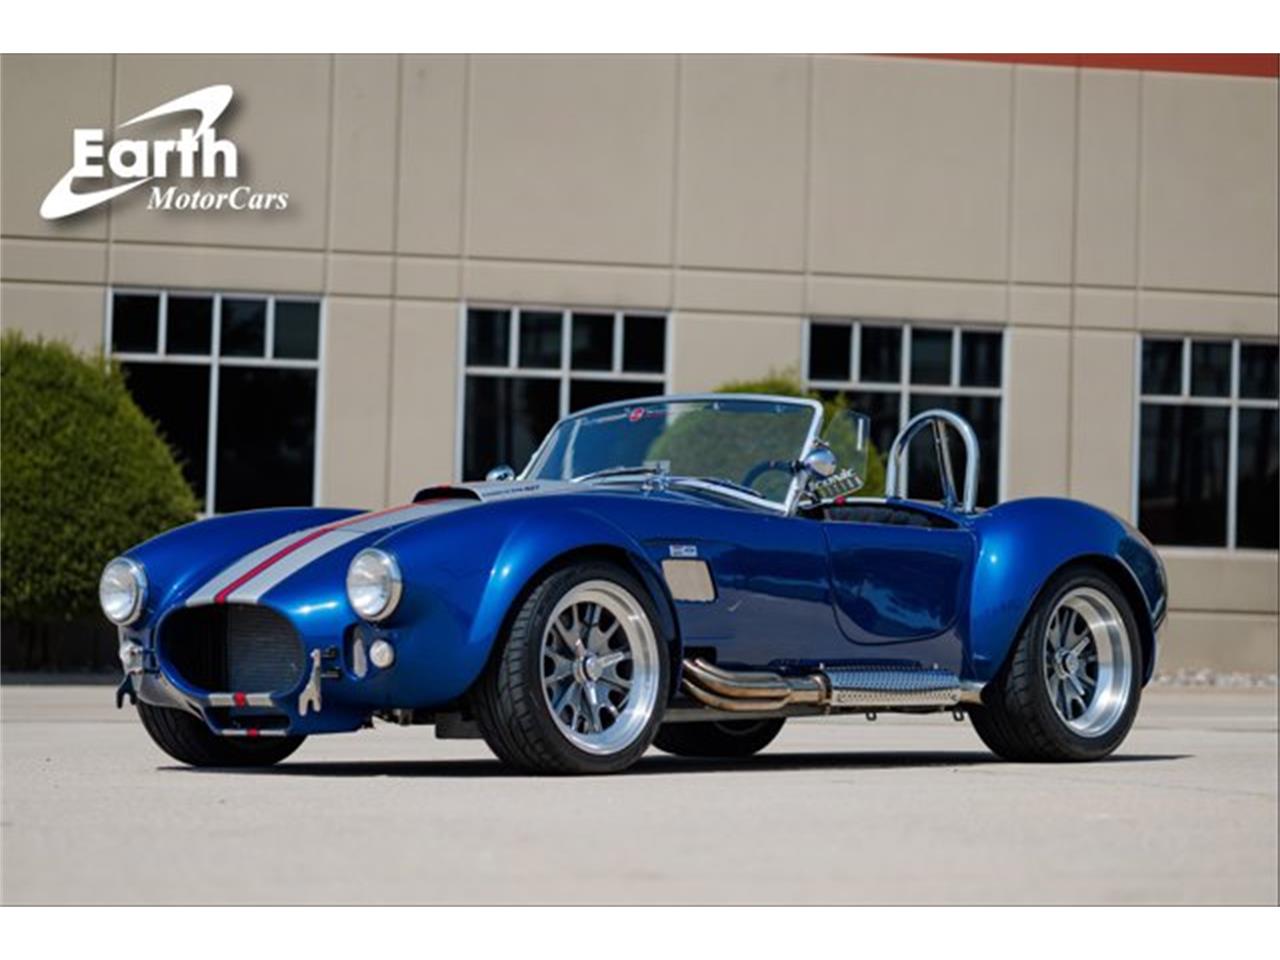 For Sale: 1965 Shelby Cobra in Carrollton, Texas for sale in Carrollton, TX